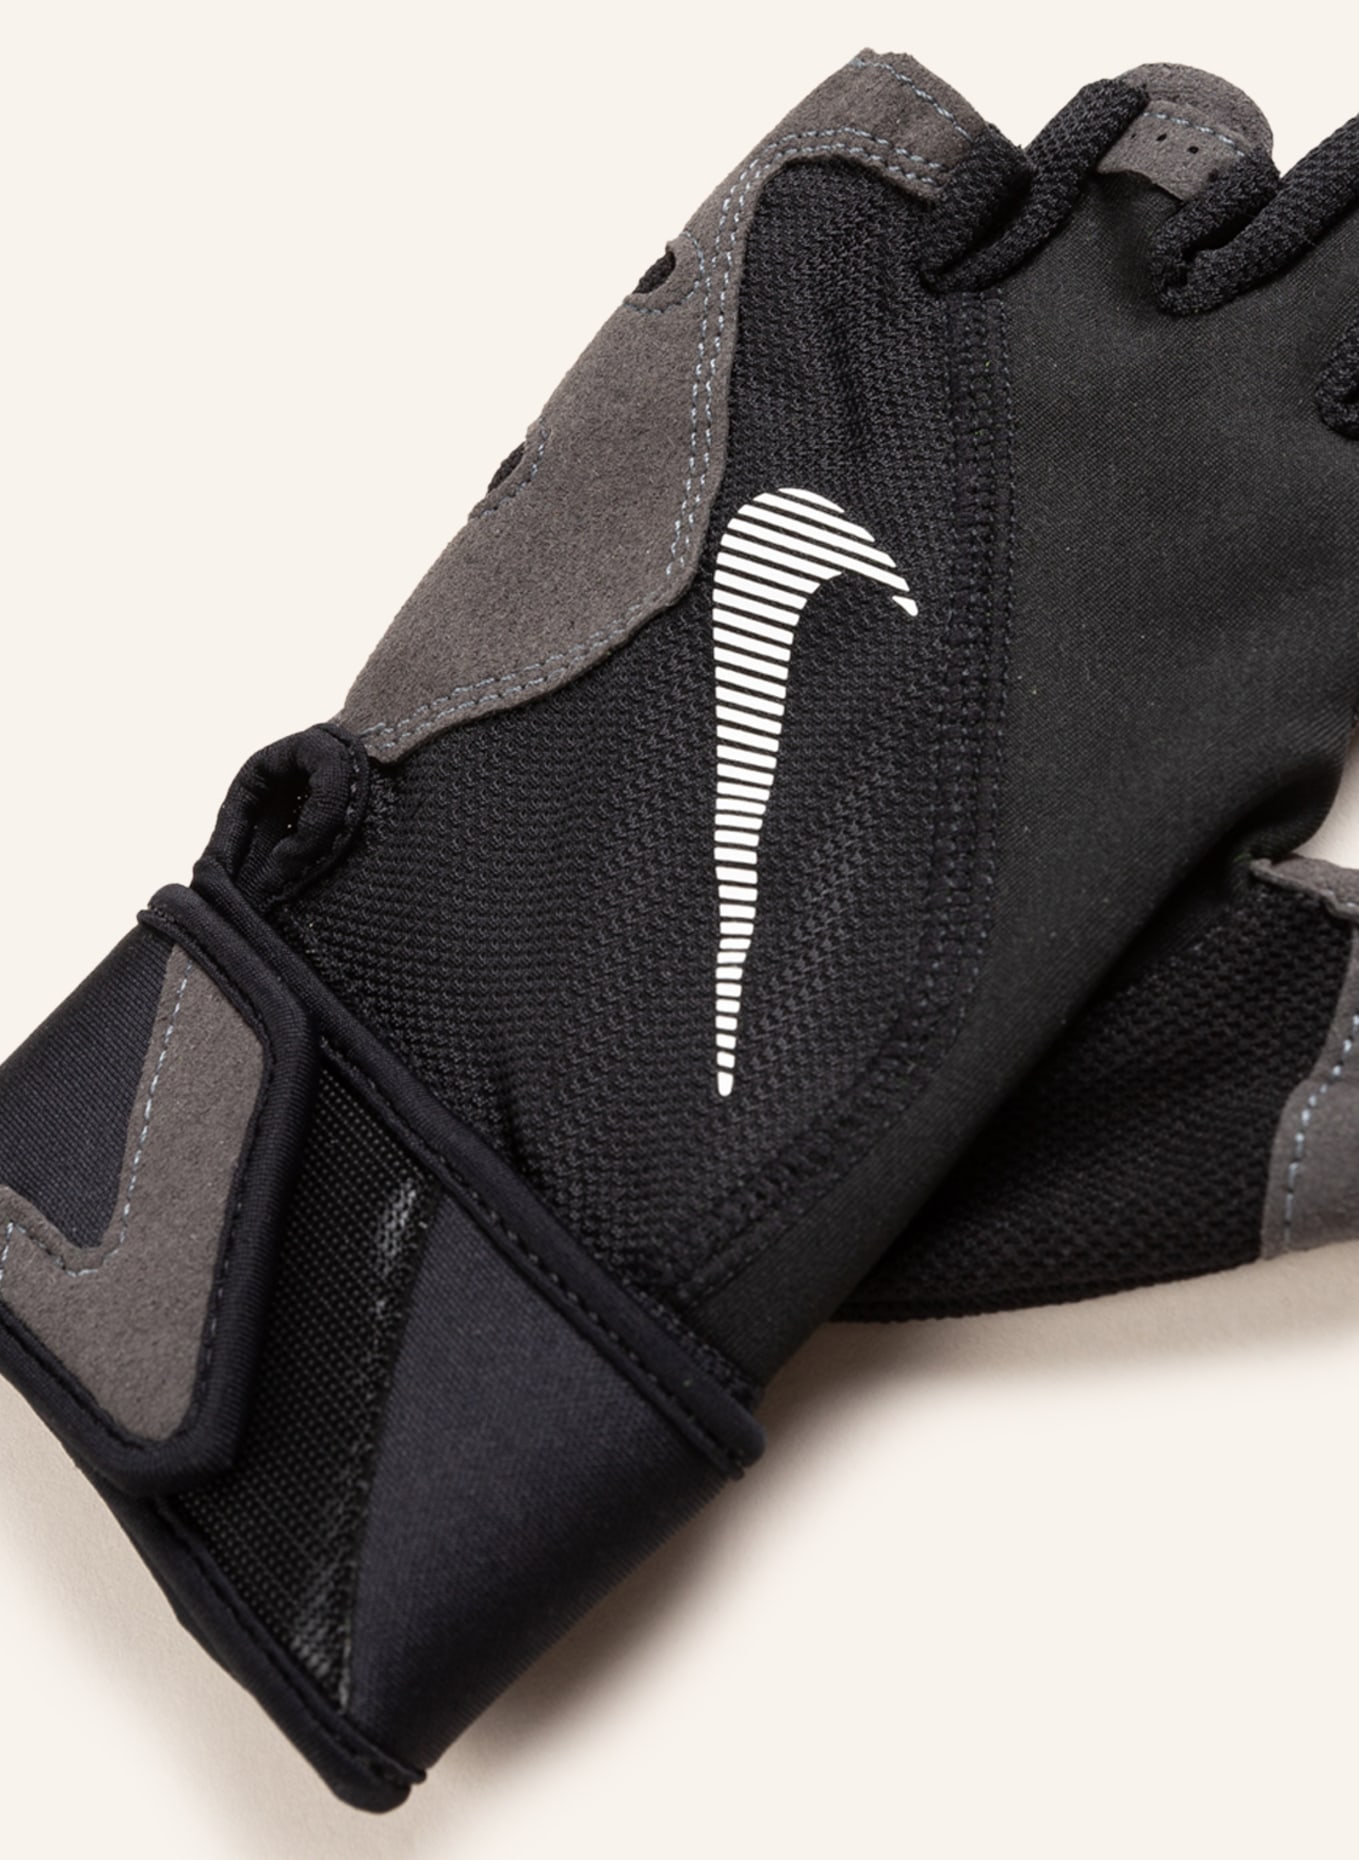 Nike Training gloves GYM PREMIUM in black/ gray